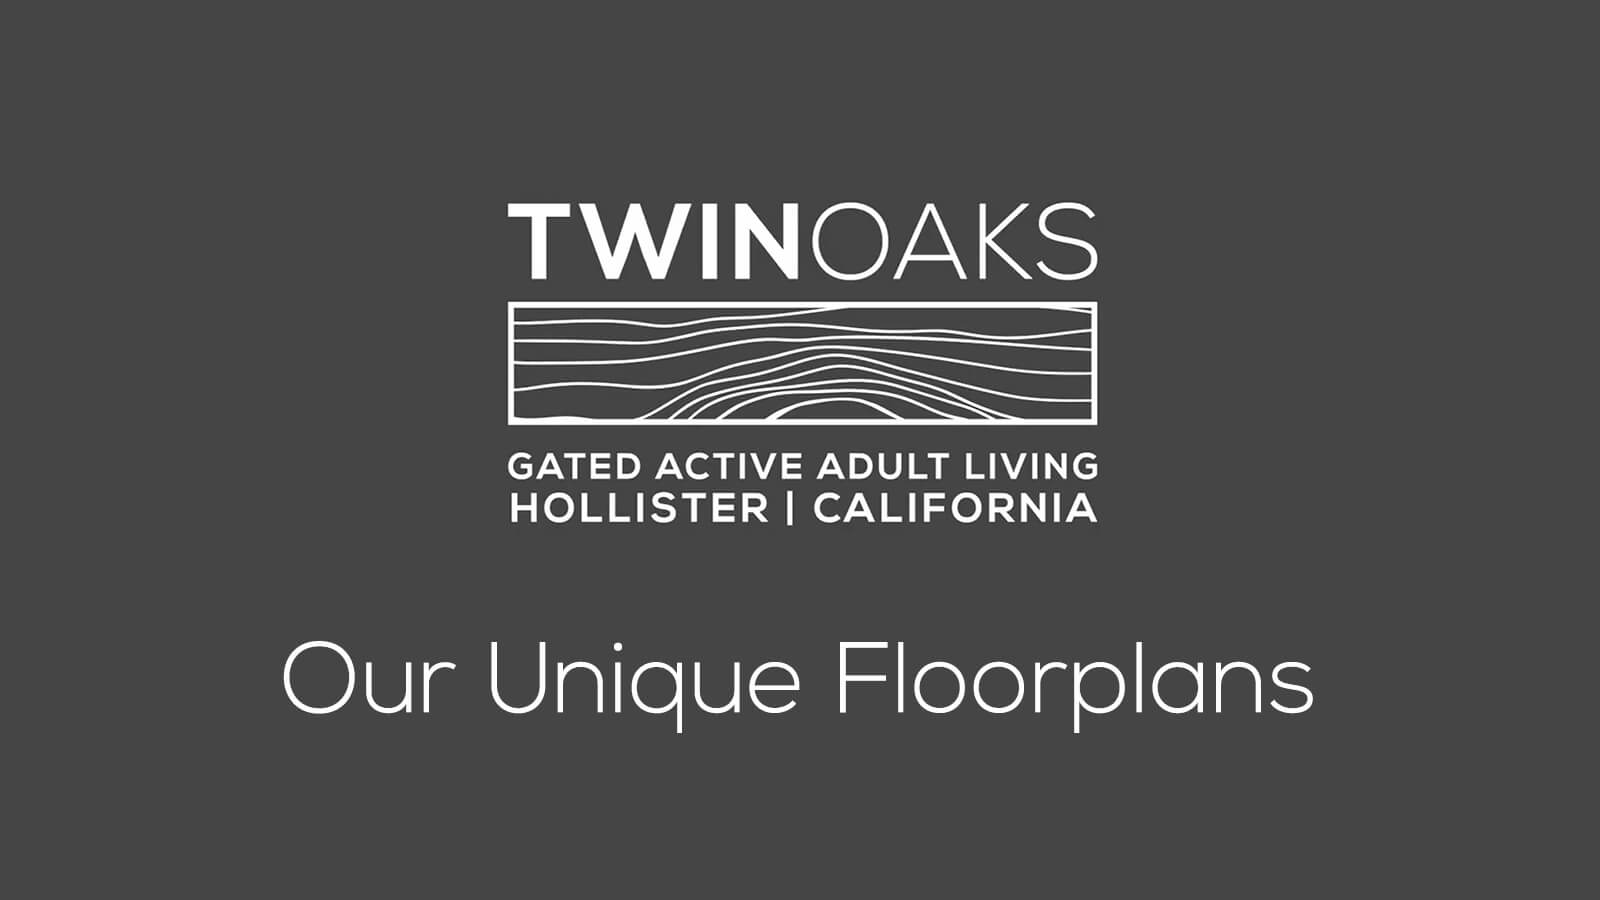 Video: Twin Oaks gated active adult living - Our Unique Floorplans